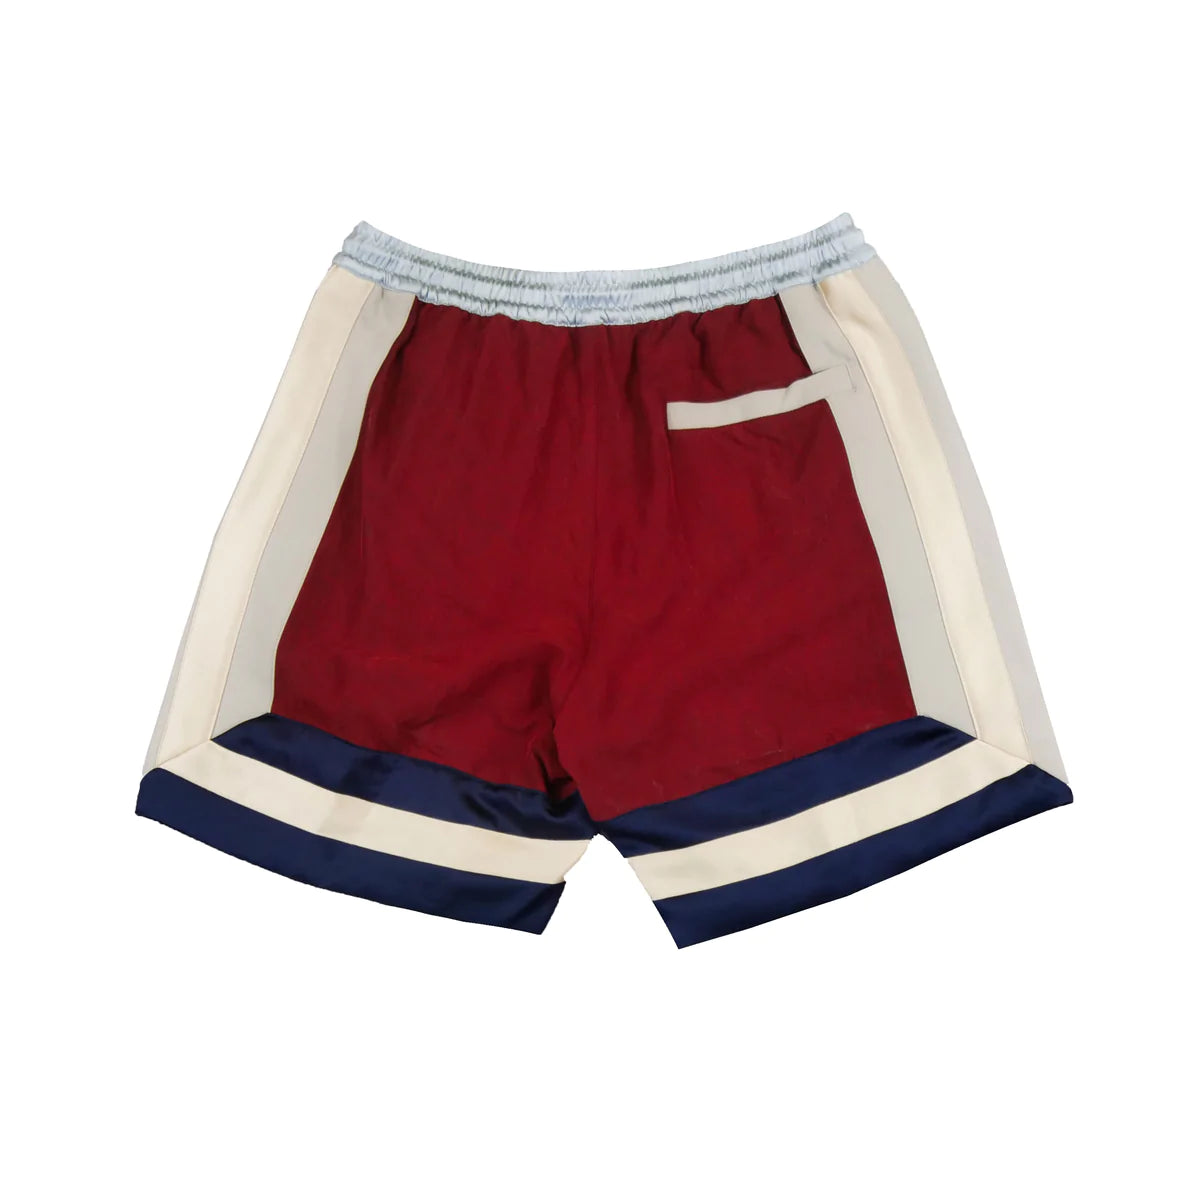 alphastyle gerald silk shorts - 8586 red